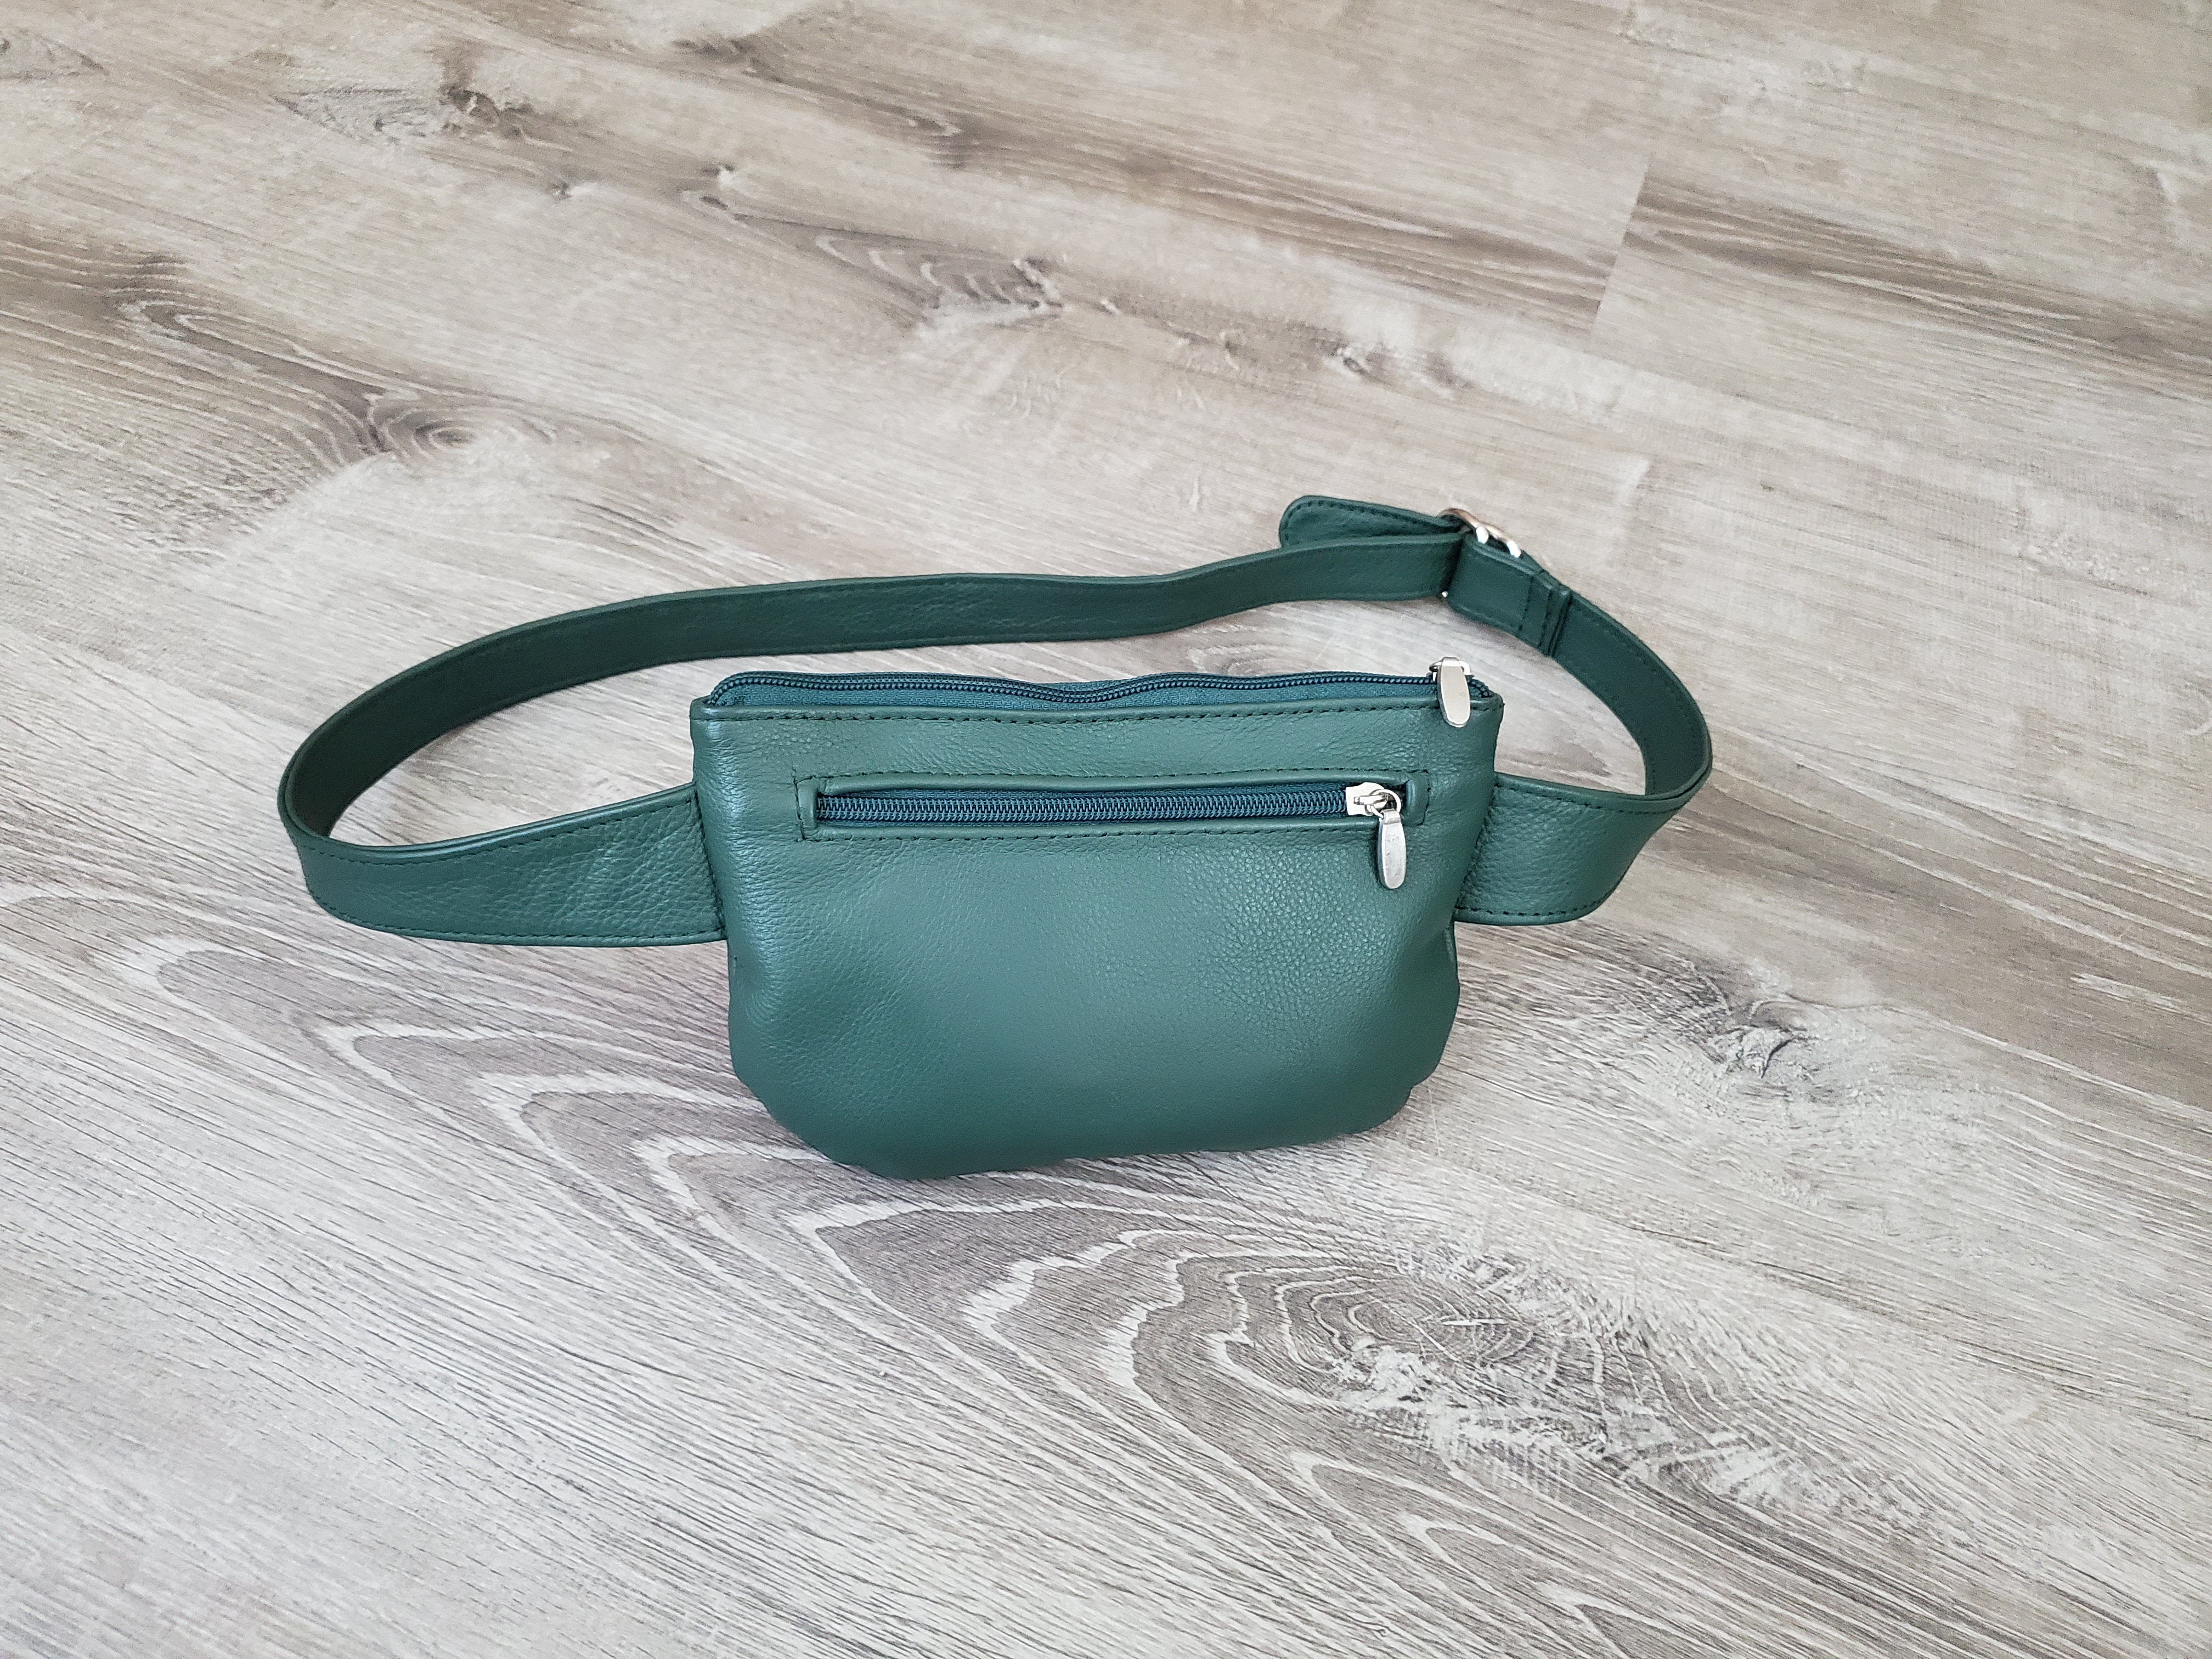 Minimalist Leather Fanny Pack / Belt Bag for Women or Men. 